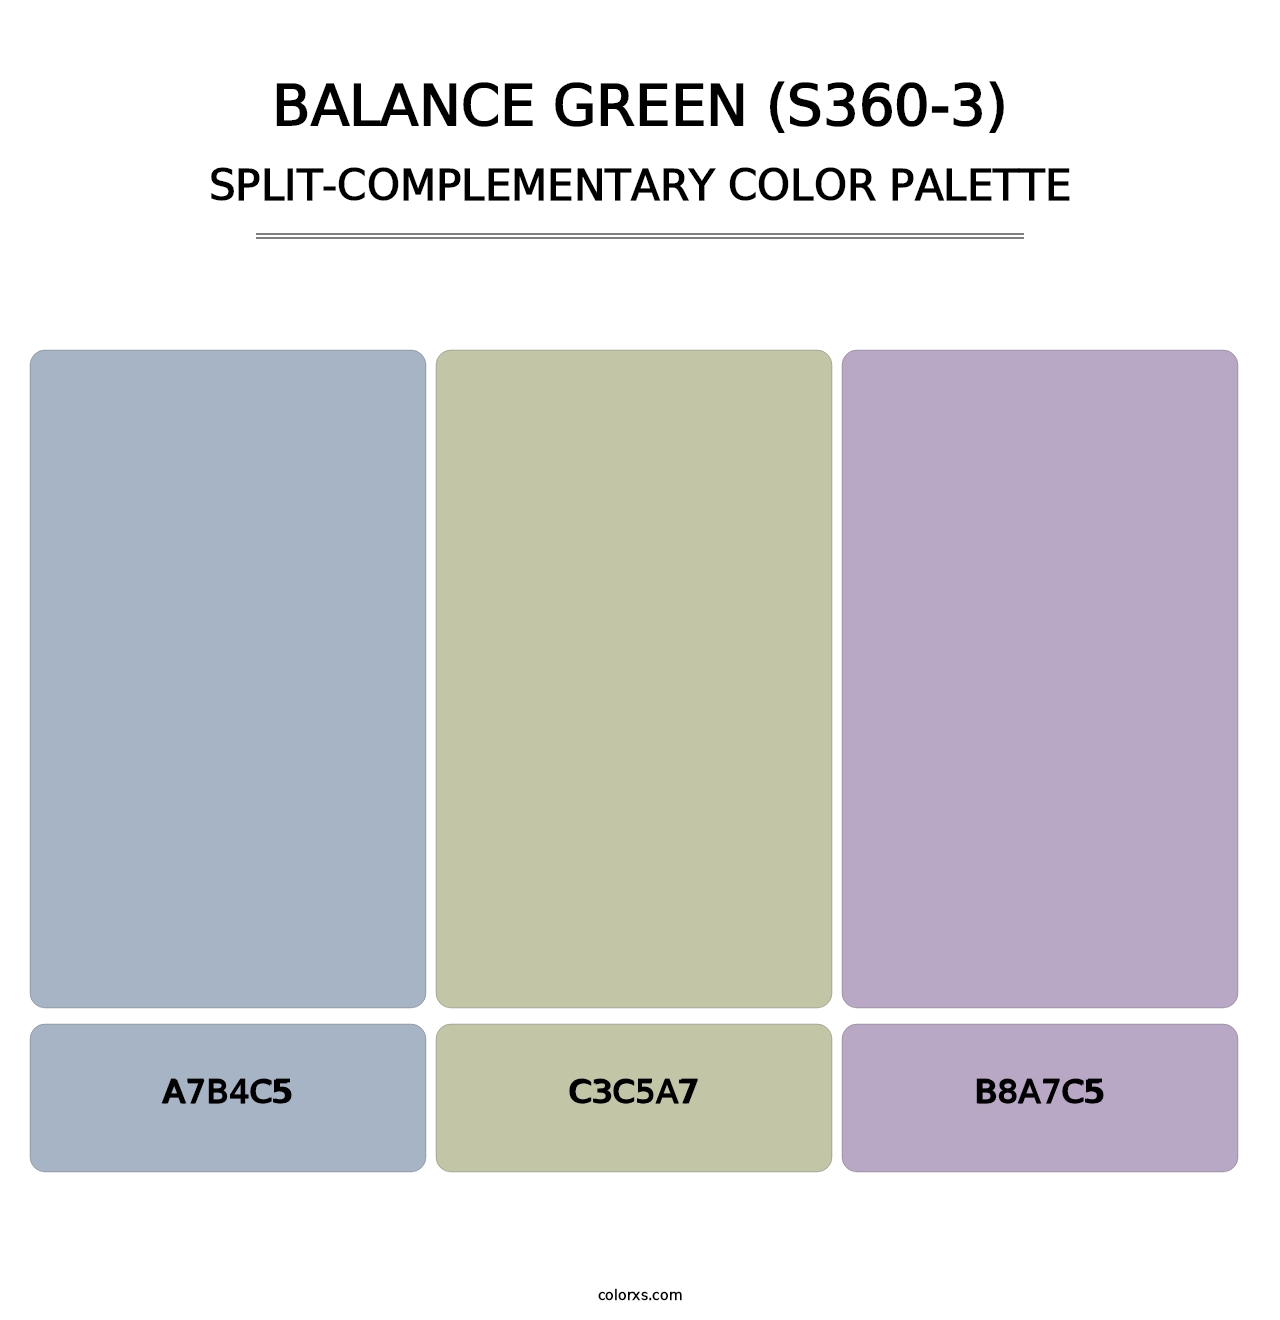 Balance Green (S360-3) - Split-Complementary Color Palette